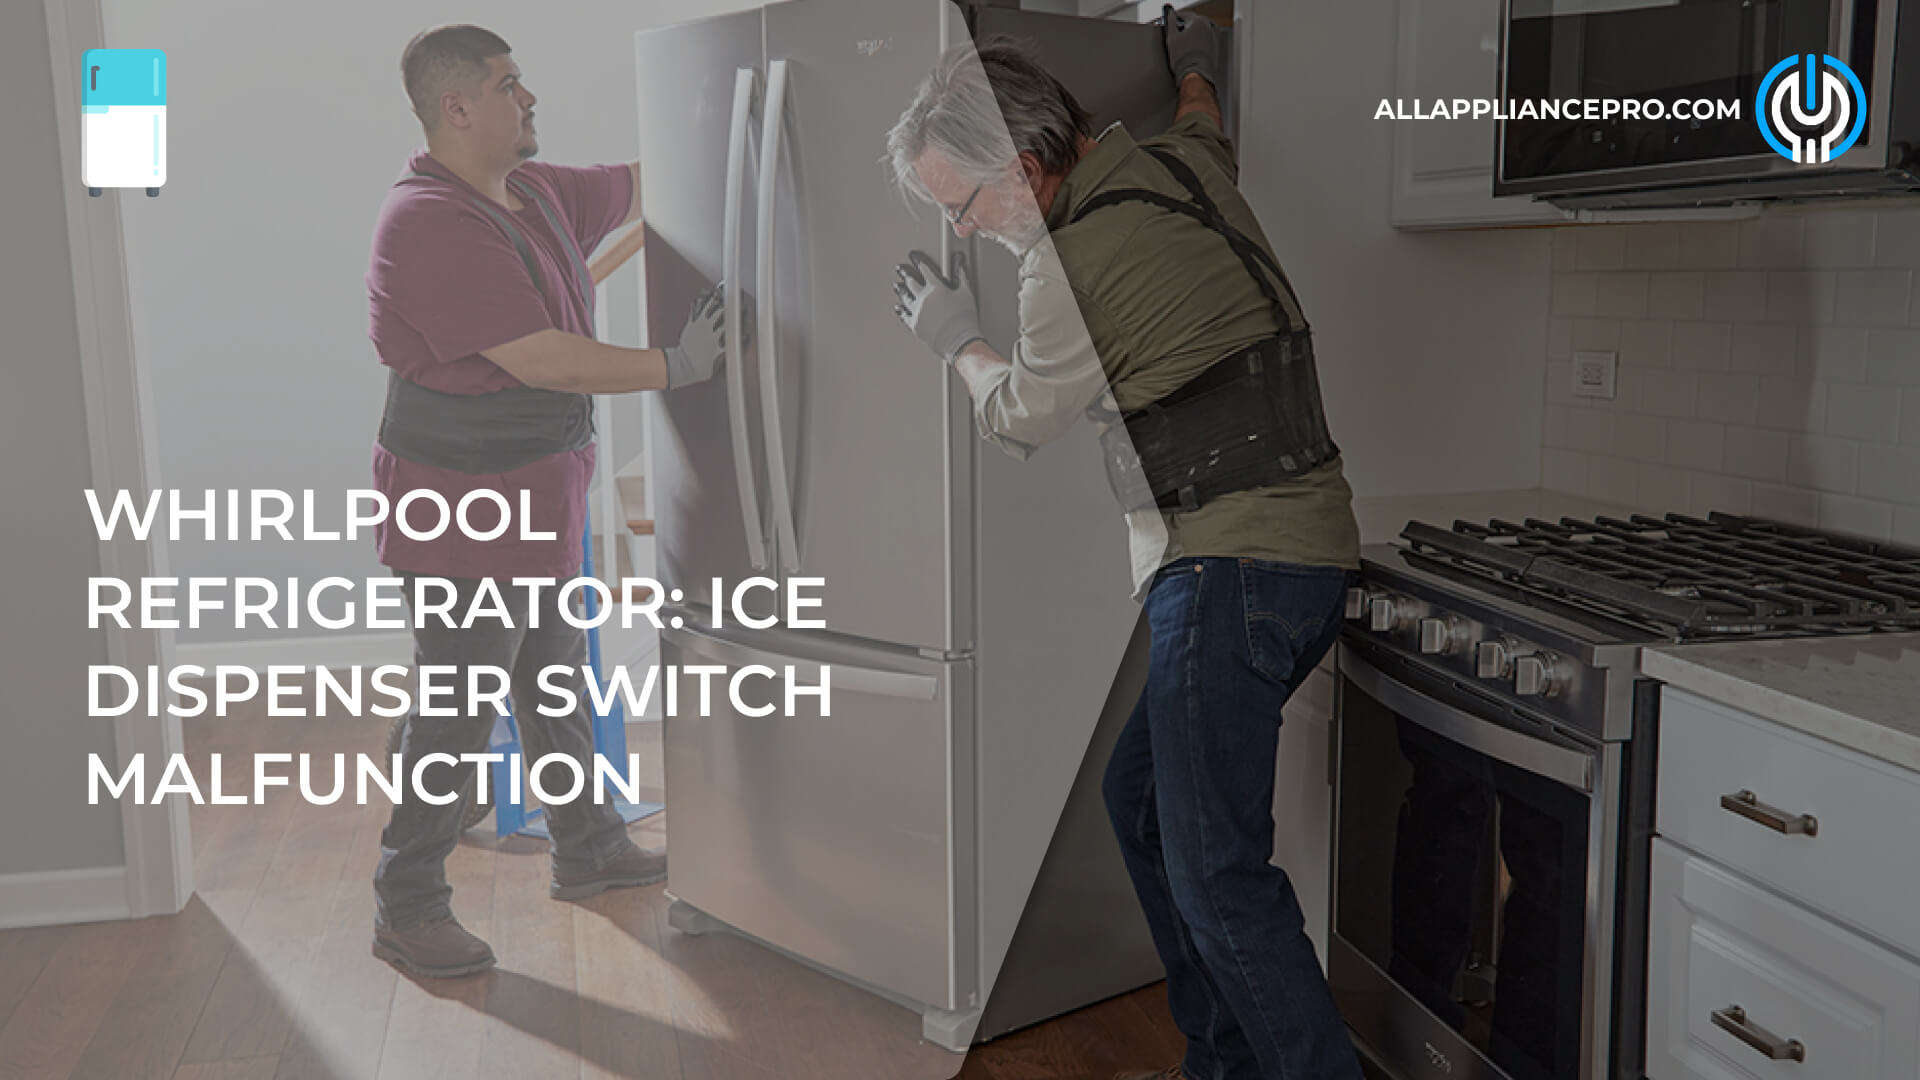 Whirlpool Refrigerator: Ice Dispenser Switch Malfunction